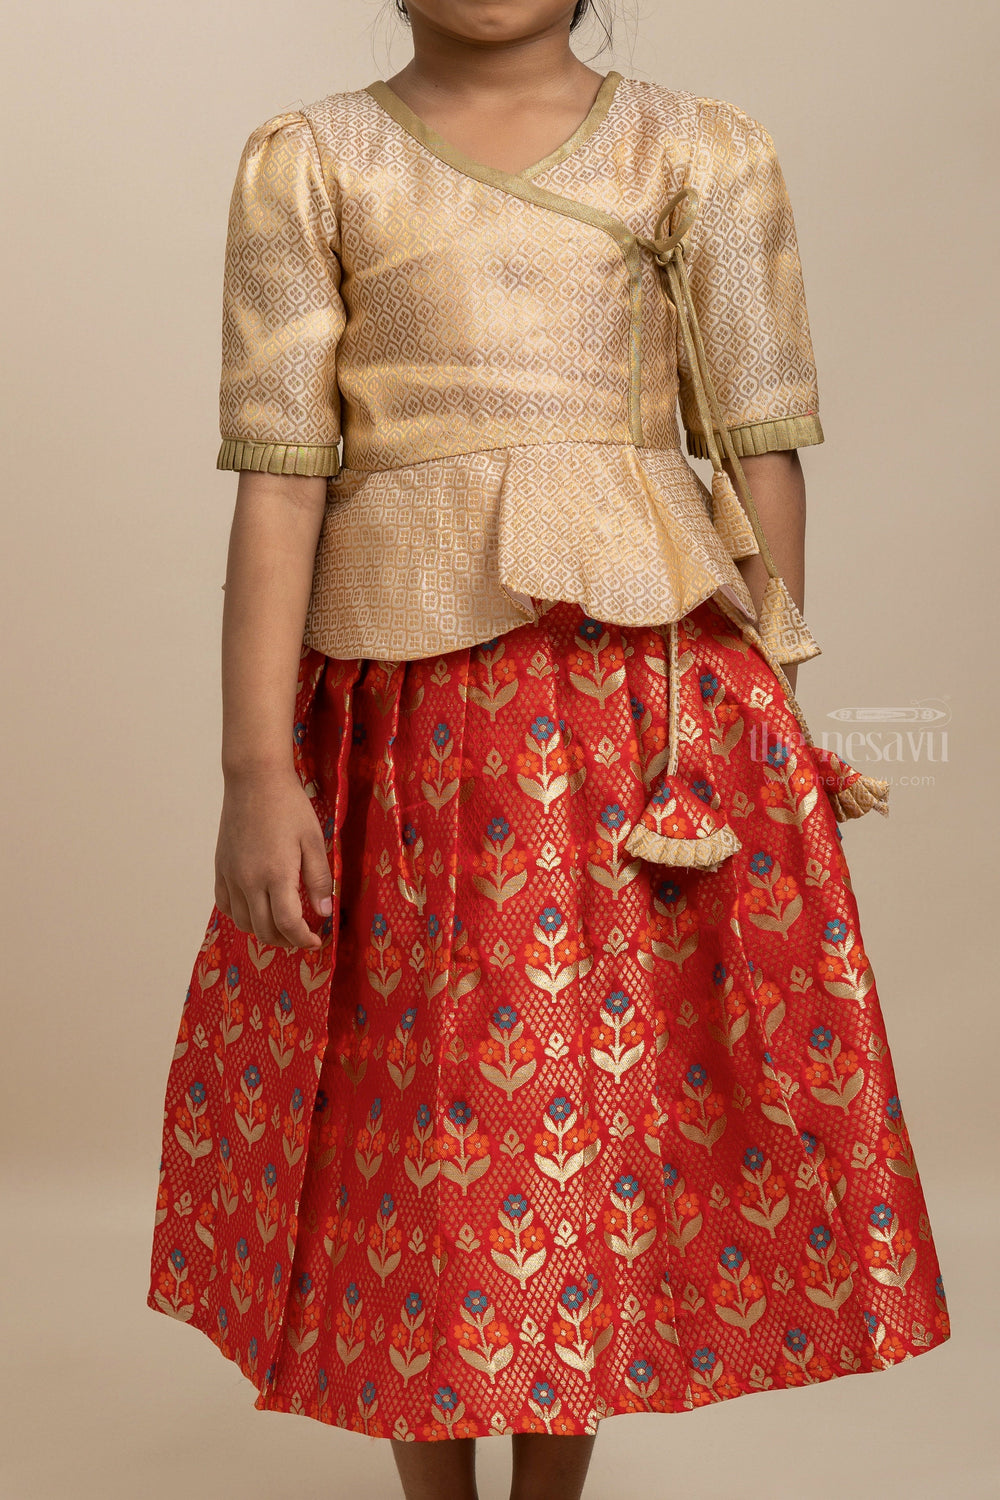 The Nesavu Pattu Pavadai Latest Designer Pattu Pavadai Sattai For Girls With Golden Peplum Blouse Nesavu Girls Diwali Dress Ideas | Girls Traditional Indian Outfit | The Nesavu